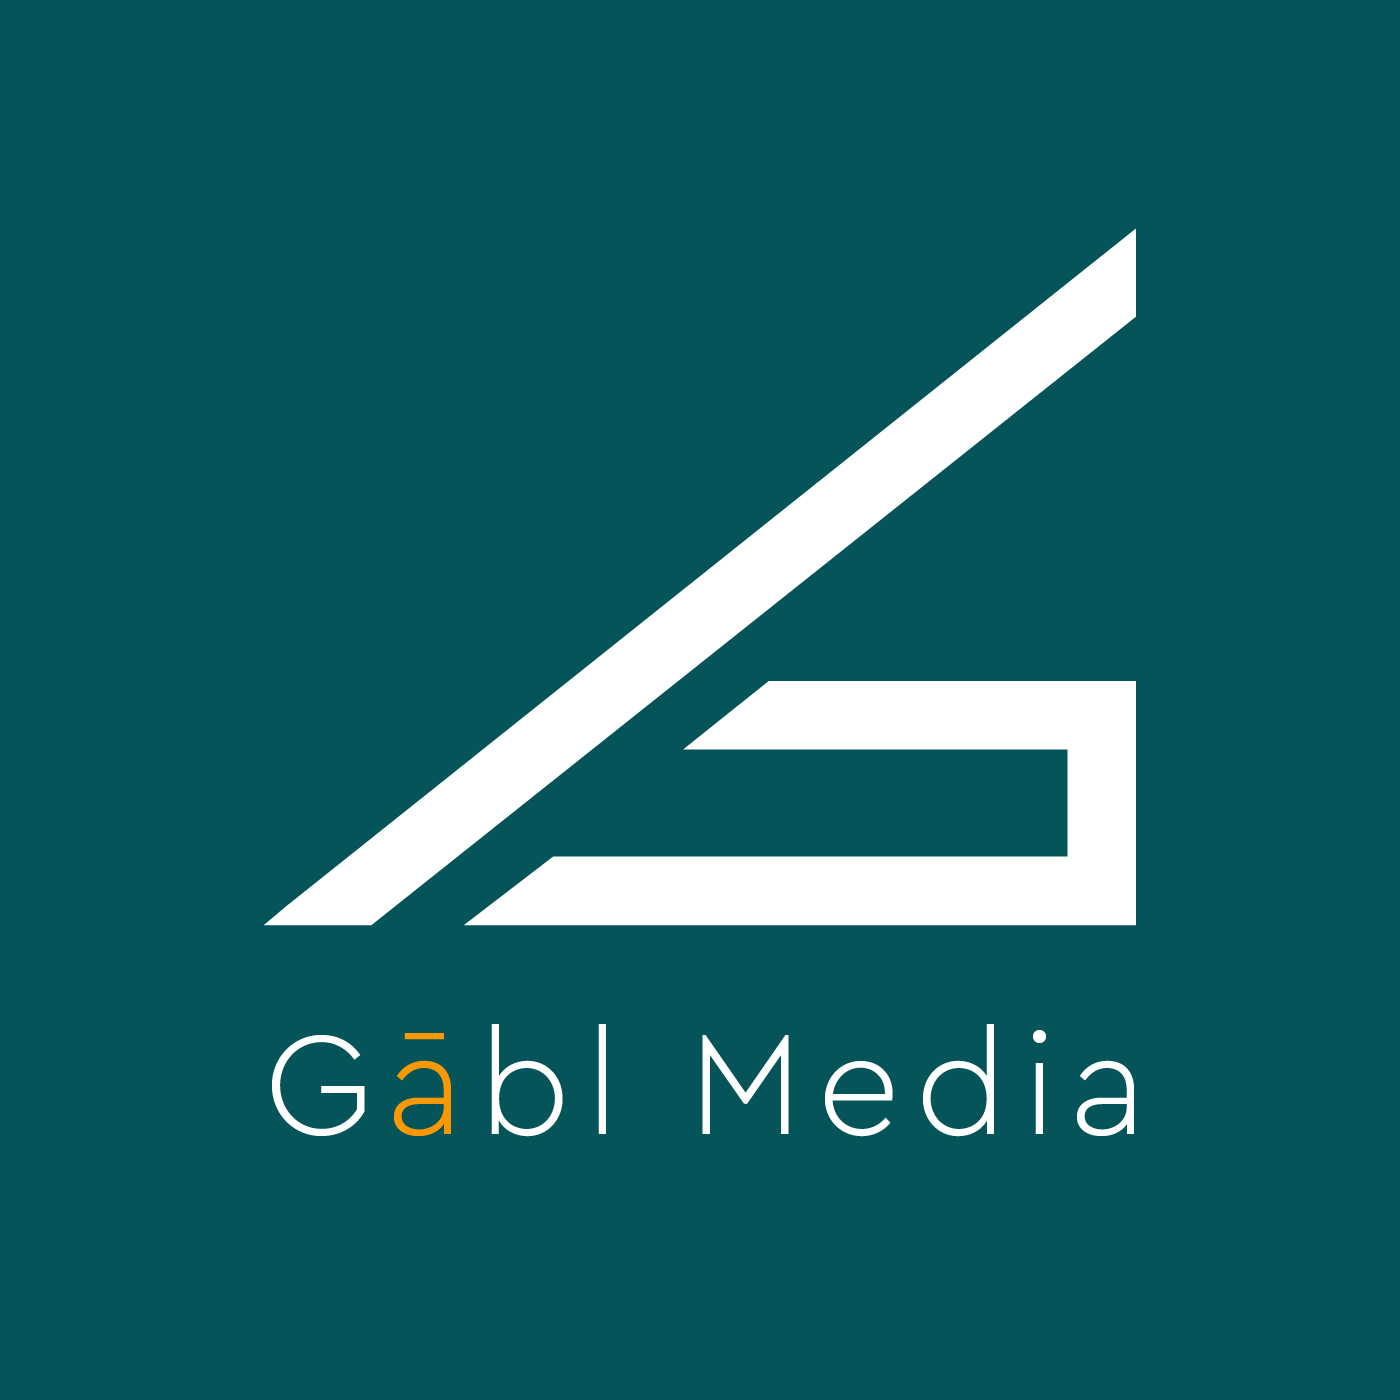 Gbl Media Continuing Education